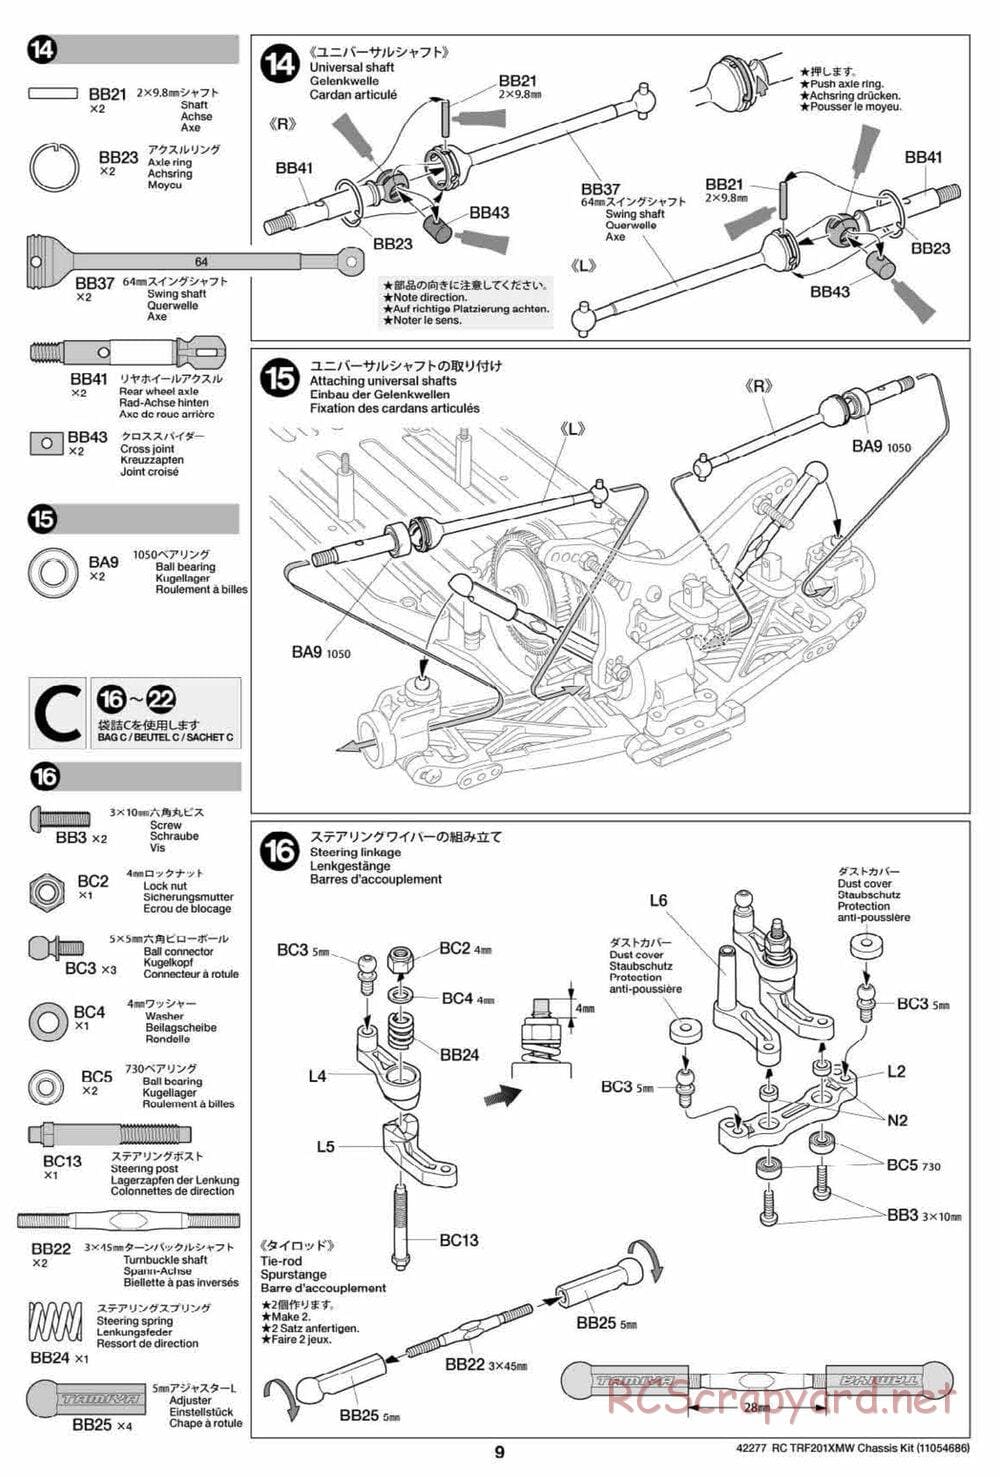 Tamiya - TRF201XMW Chassis - Manual - Page 9